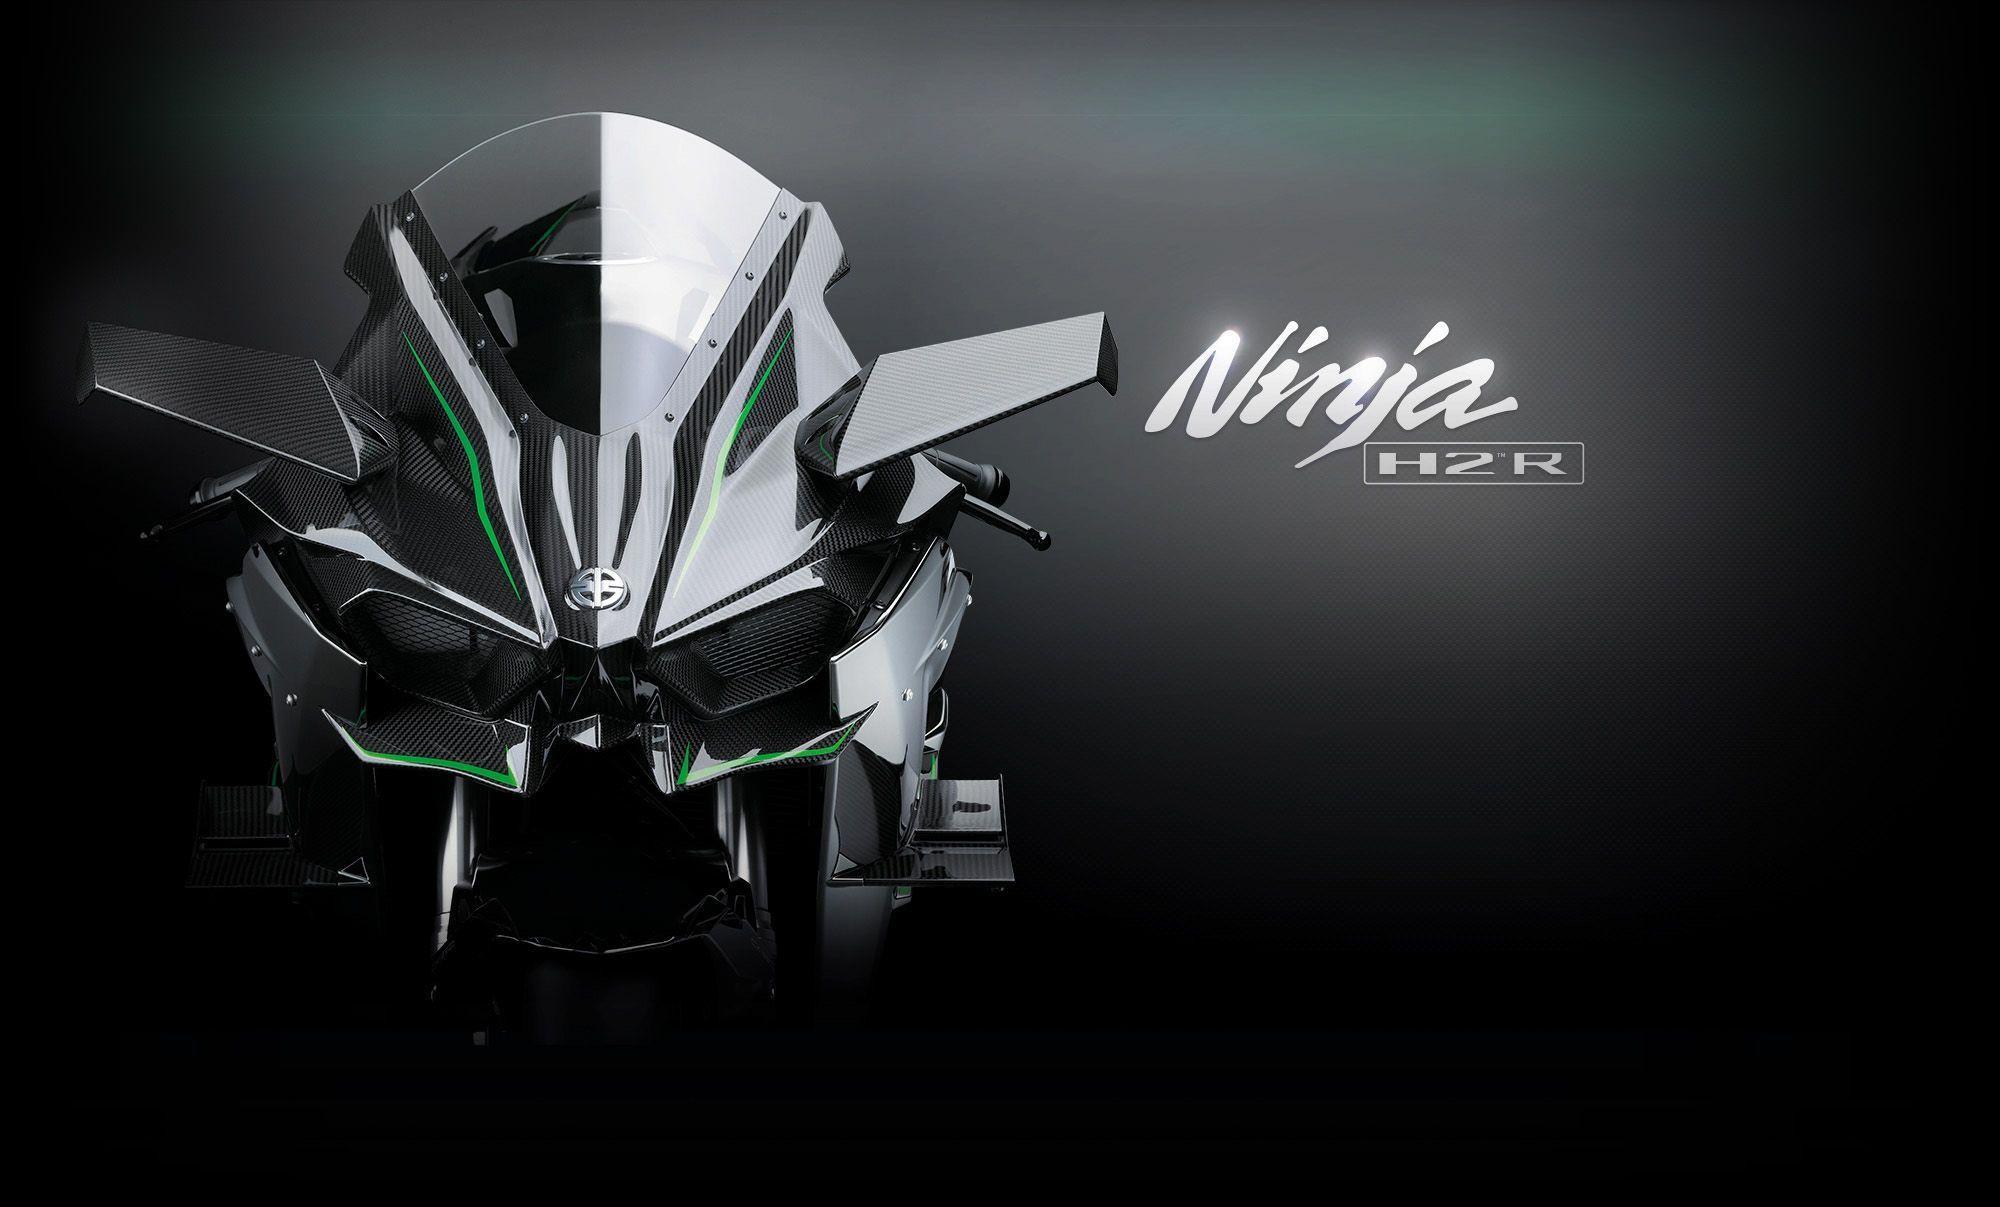 Kawasaki Ninja H2R Special Edition Price & Specifications